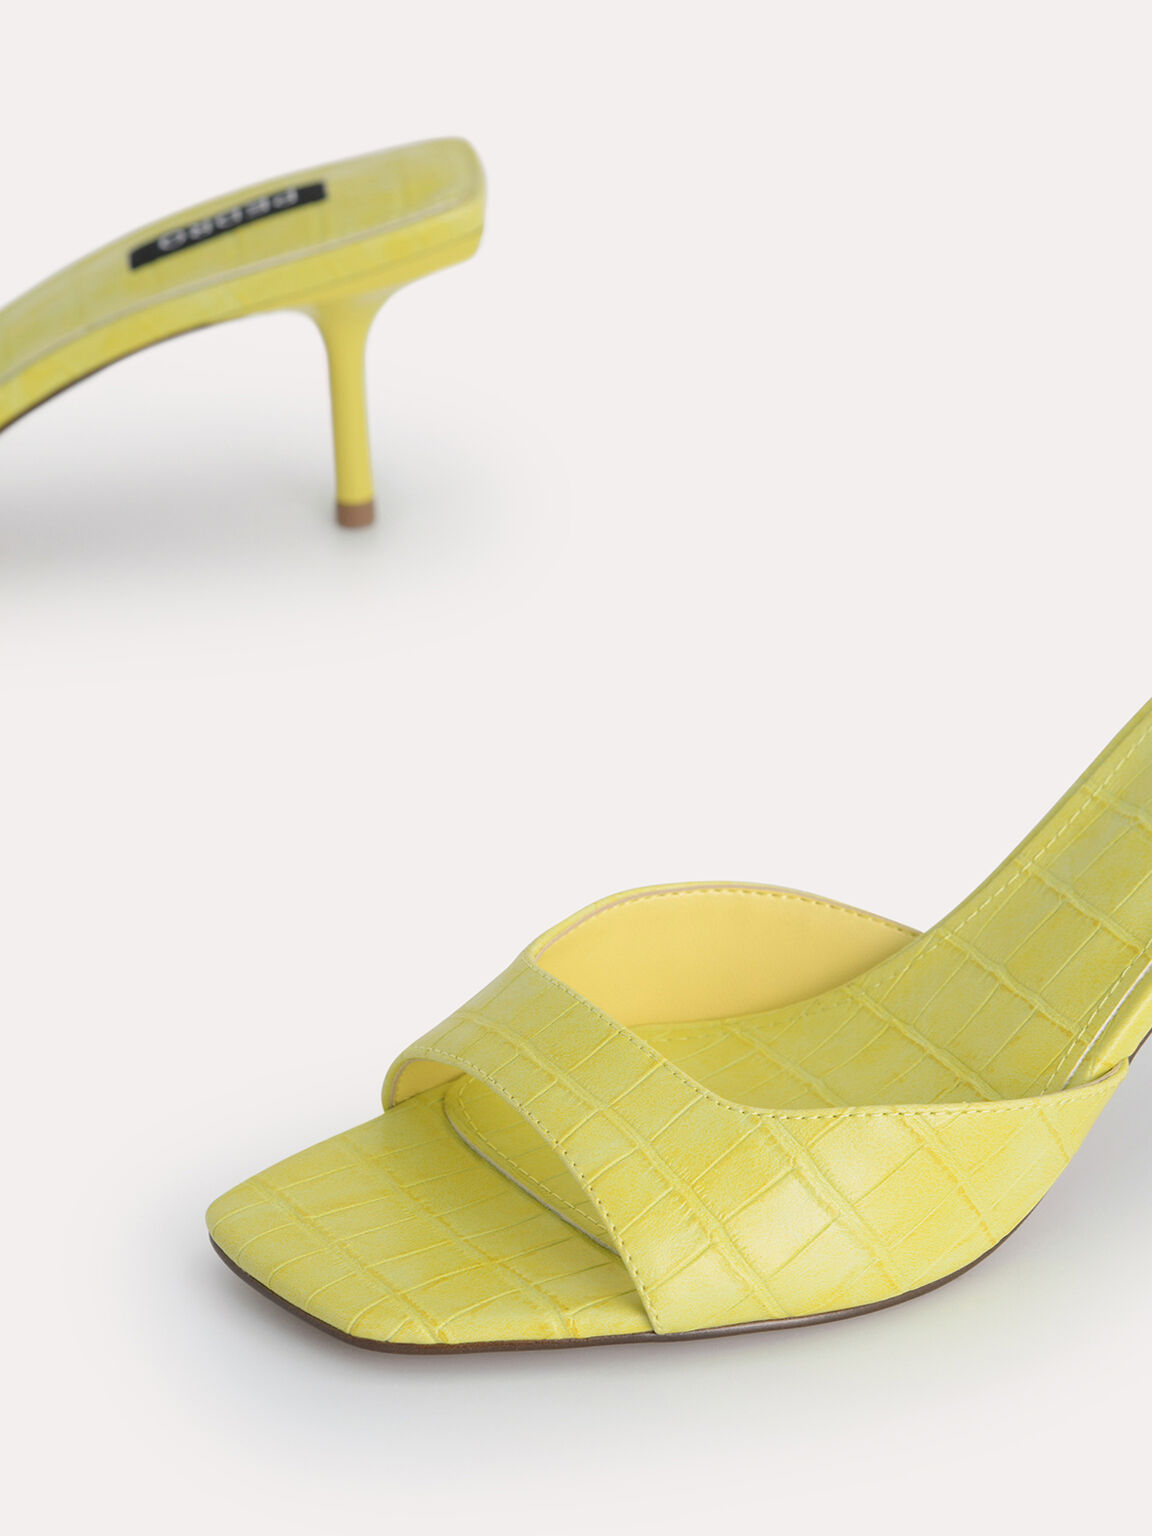 Croc-Effect Heeled Sandals, Yellow